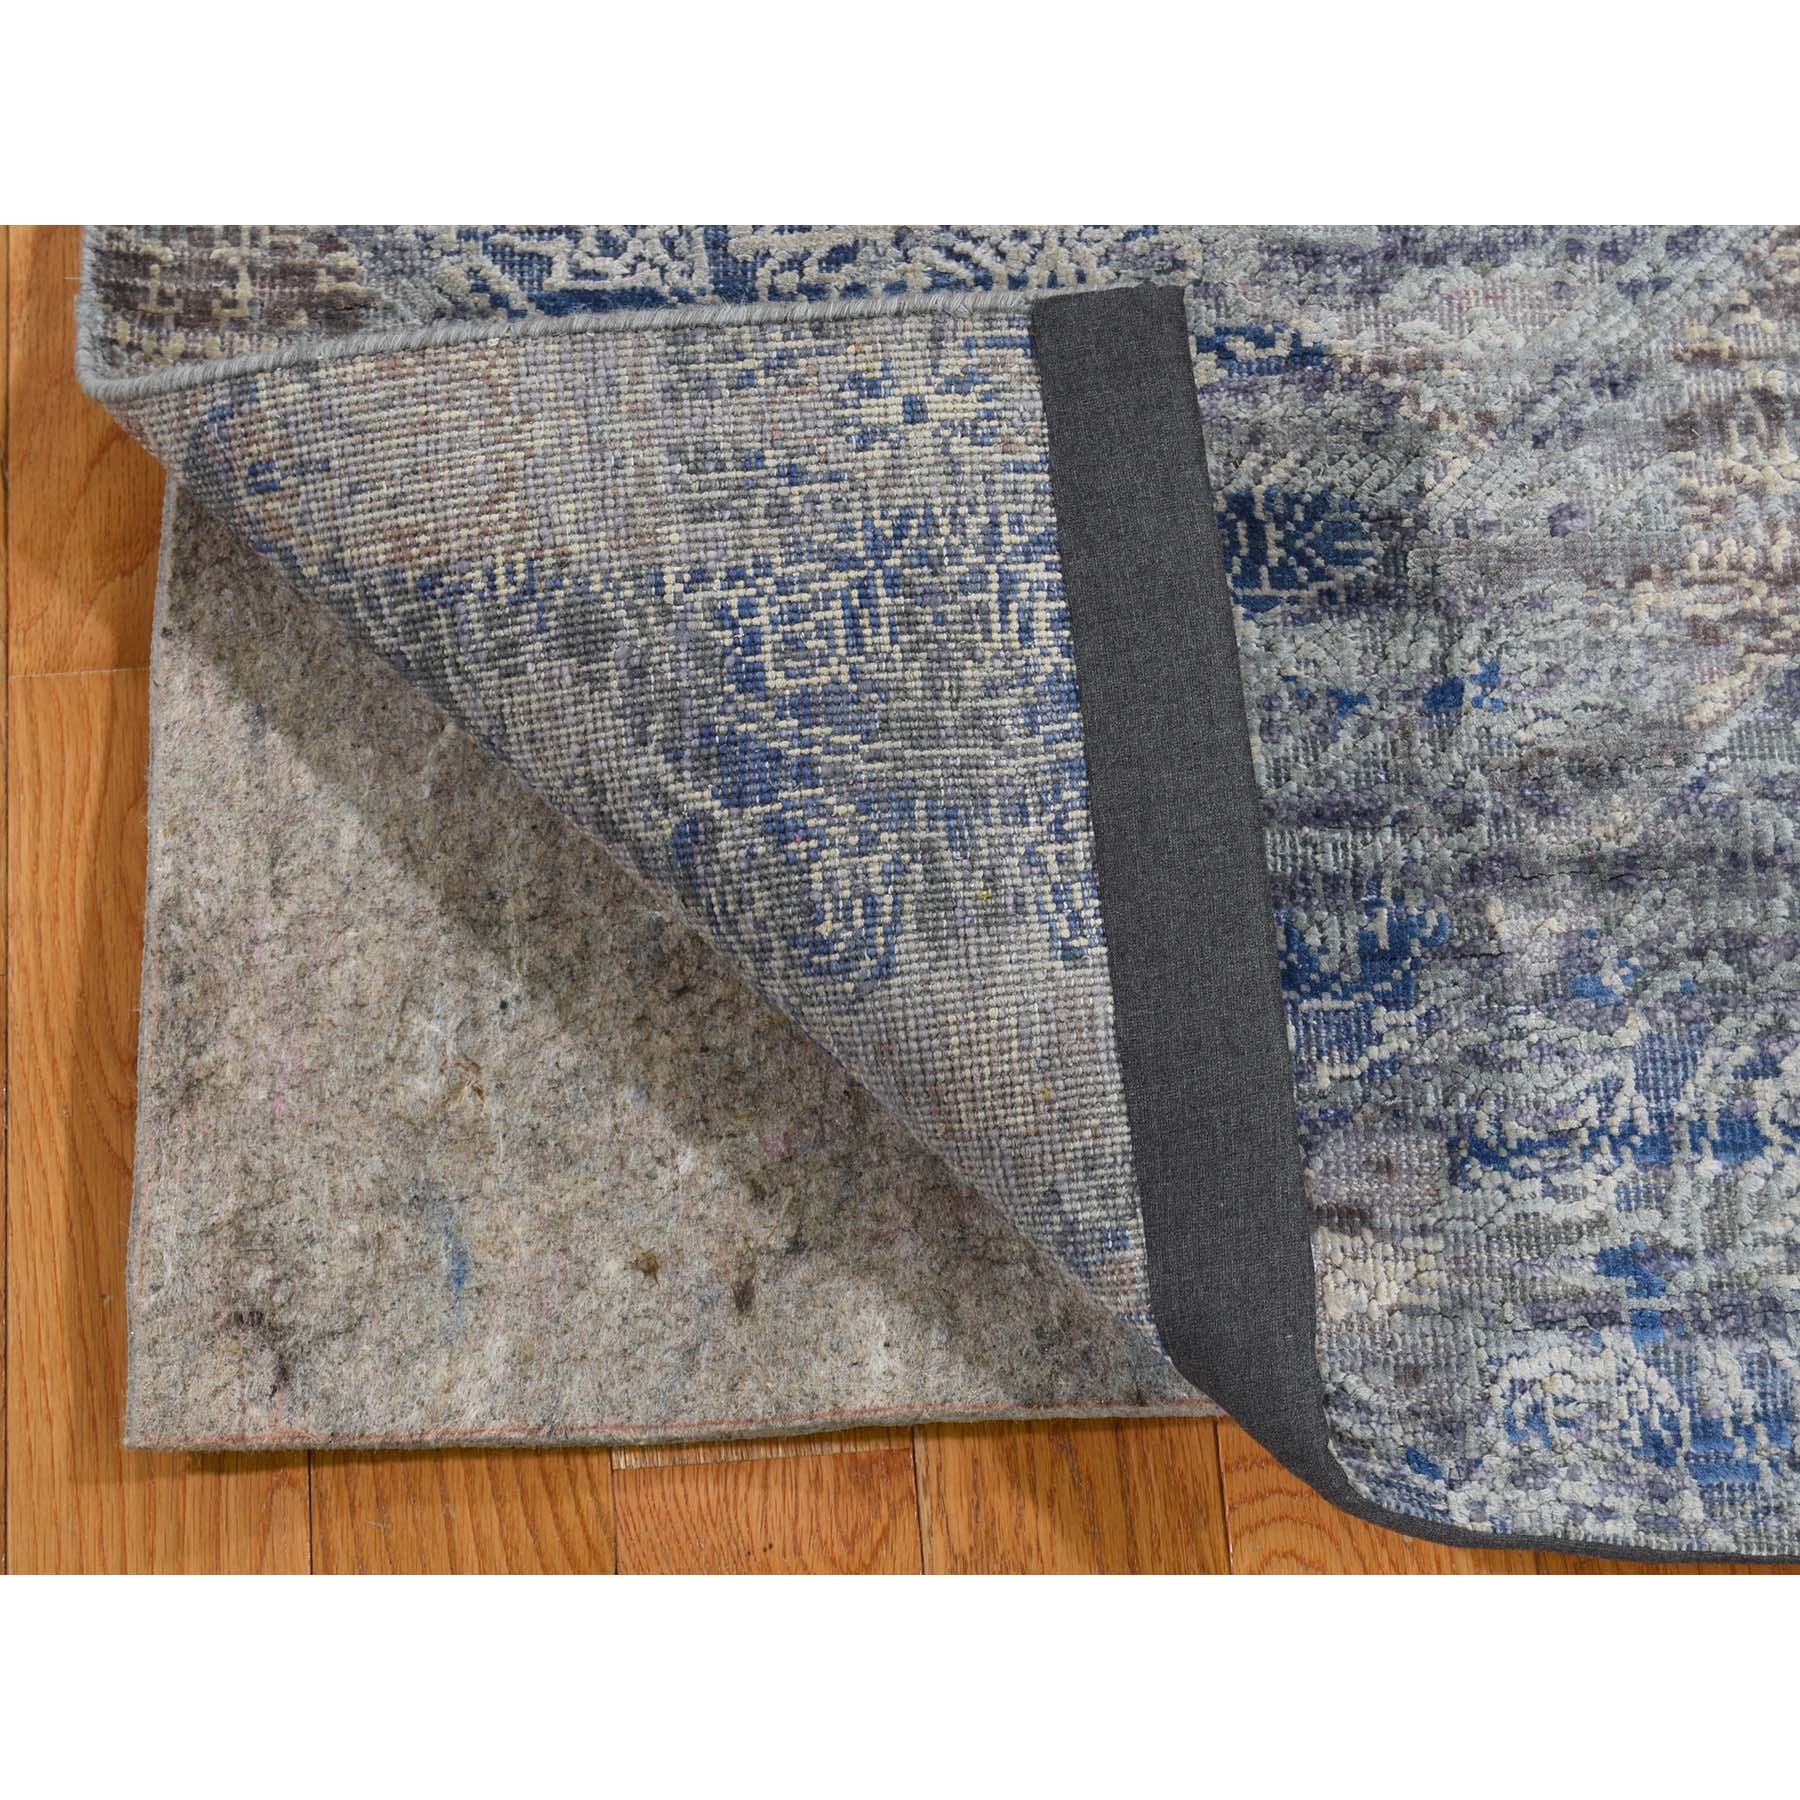 2'x3'1" ERASED ROSSETS,Silk With Textured Wool Denim BluE Hand Woven Oriental Sample Rug 